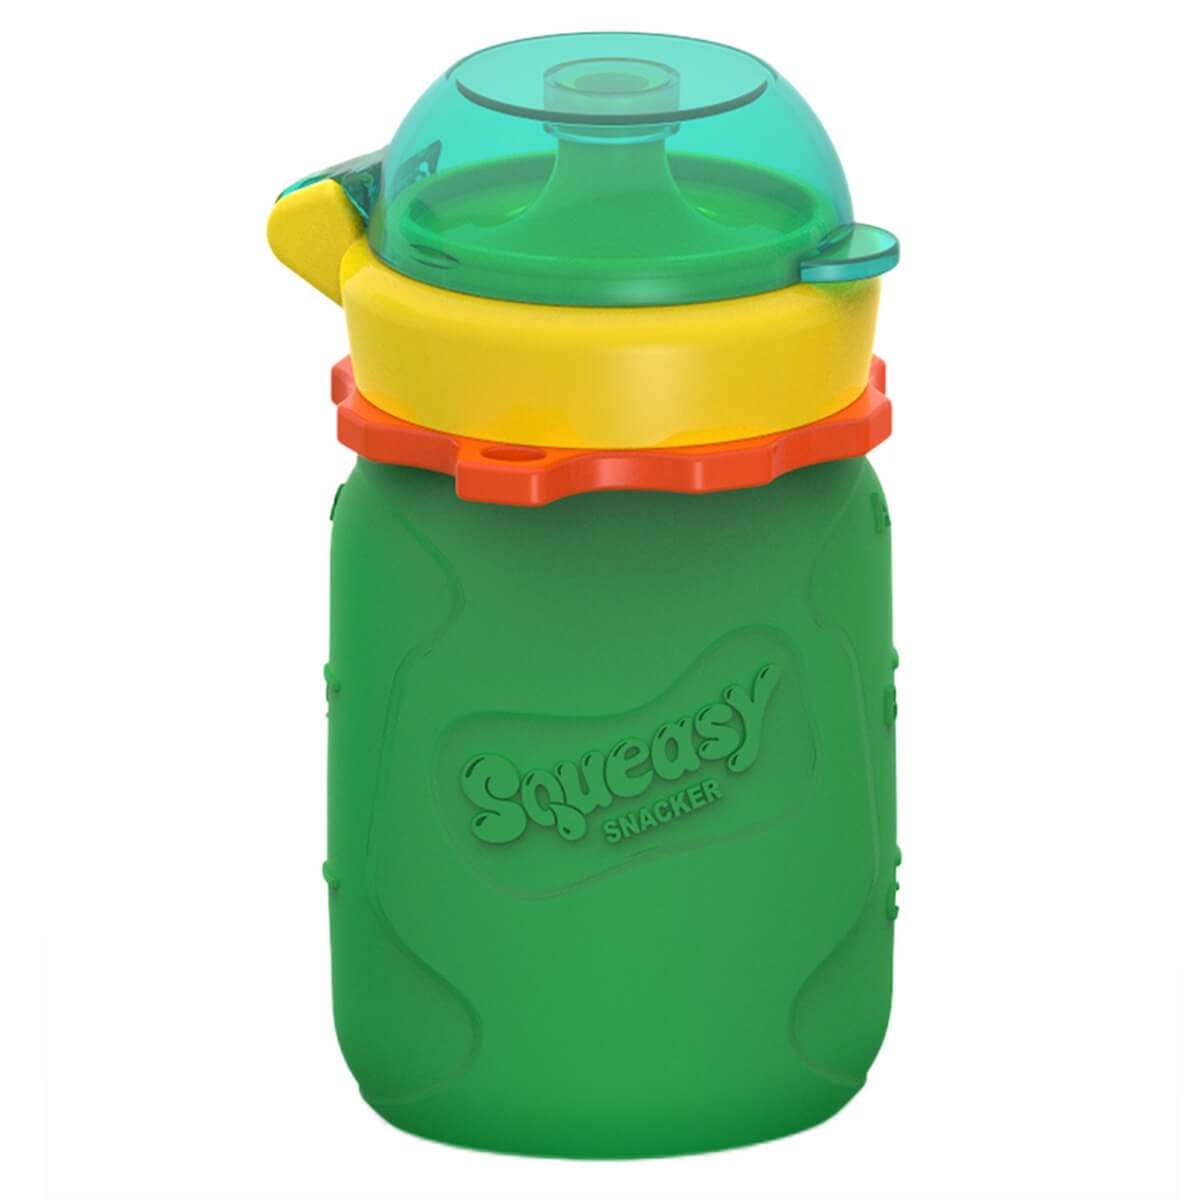 Squeasy Gear snack pouch Squeasy Gear Squeasy Snacker - Green 3.5 OZ